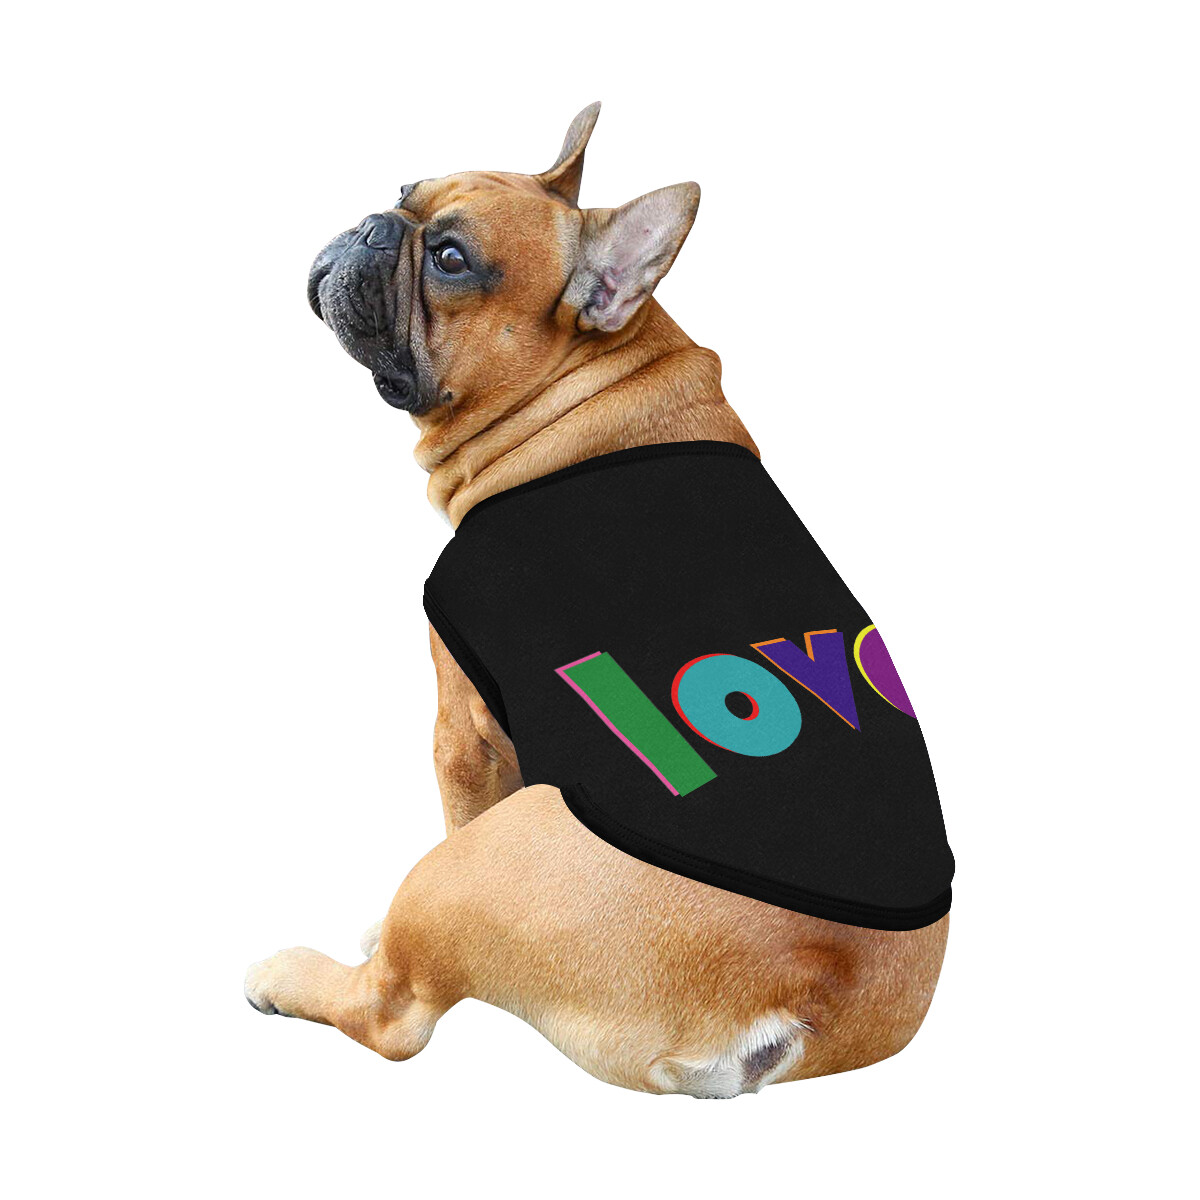 🐕 Love Dog shirt, Dog Tank Top, Dog t-shirt, Dog clothes, Gifts, front back print, 7 sizes XS to 3XL, dog gifts, black